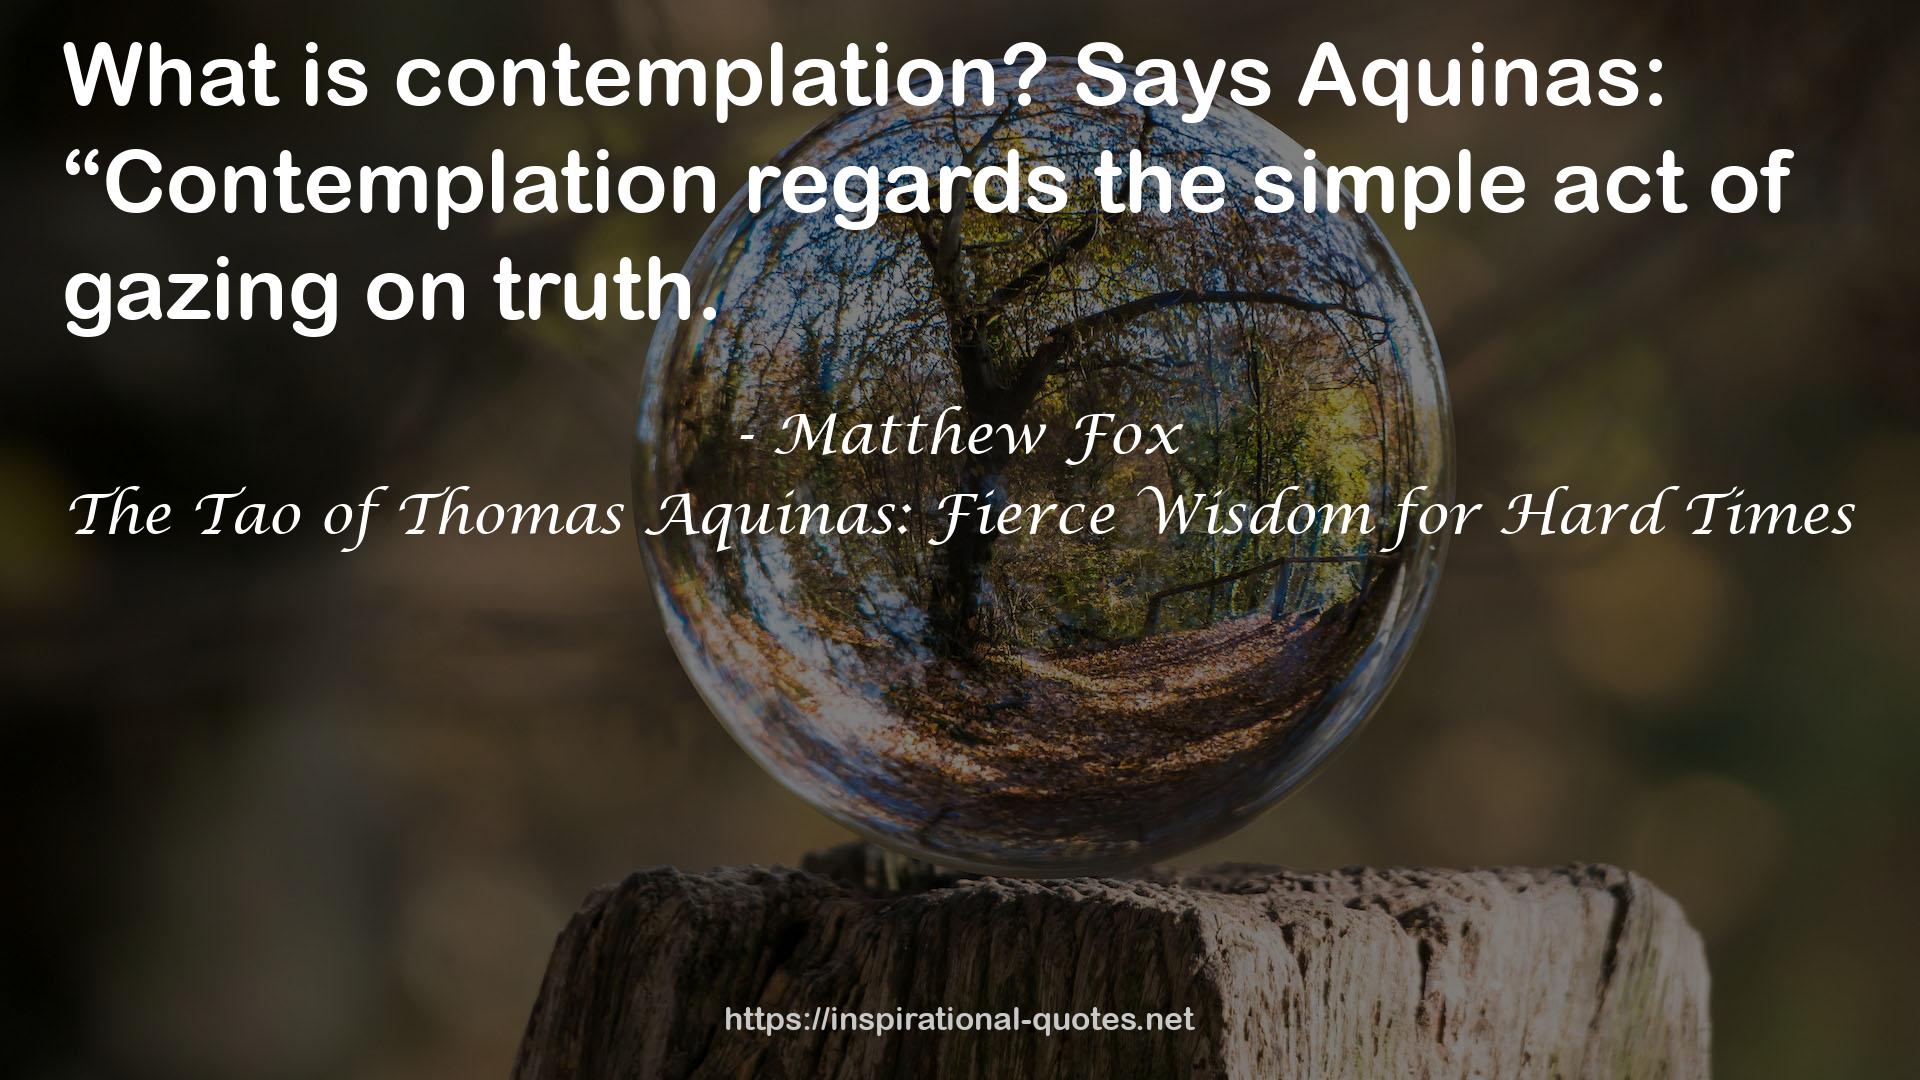 The Tao of Thomas Aquinas: Fierce Wisdom for Hard Times QUOTES